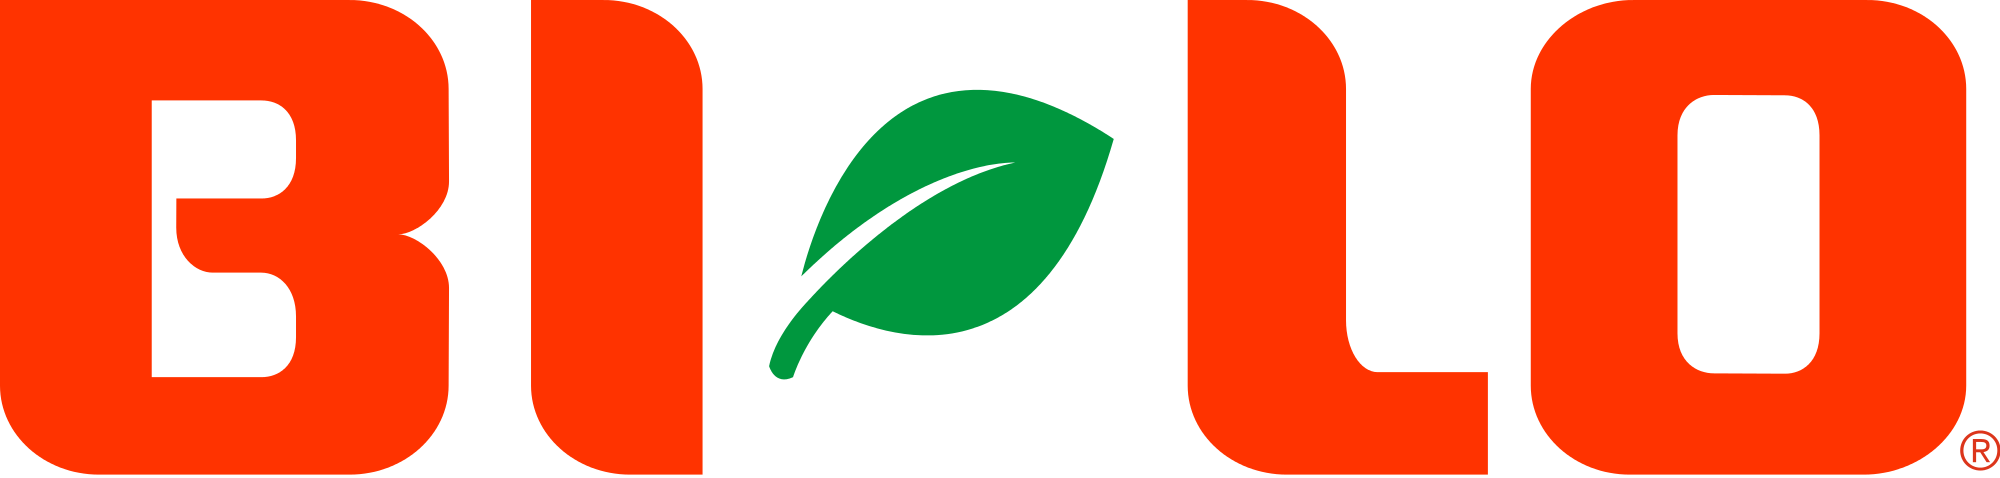 Bi-Lo - Logo